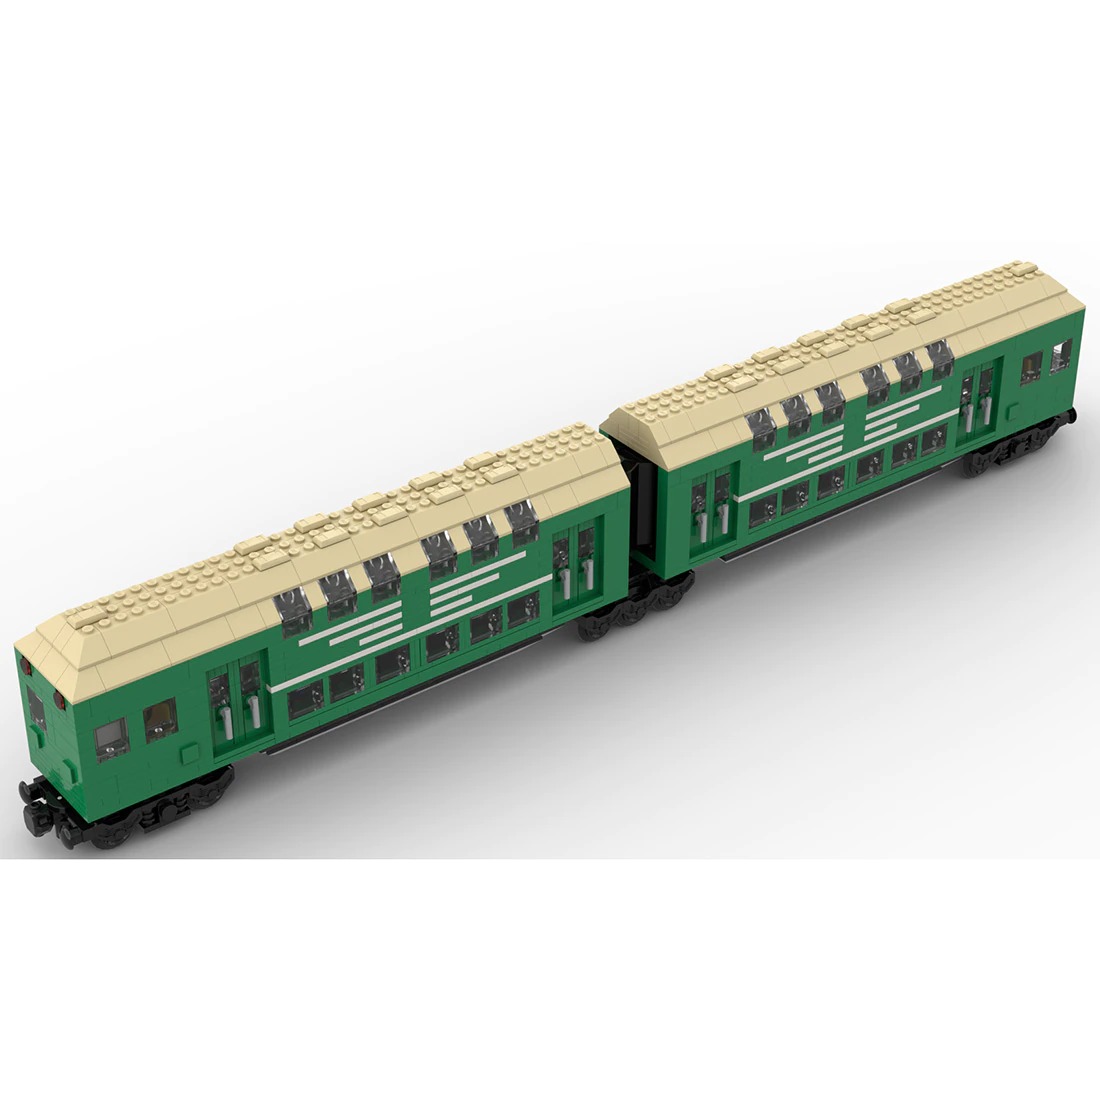 authorized moc 109281 7 axle train carri main 2 1 - ZHEGAO Block